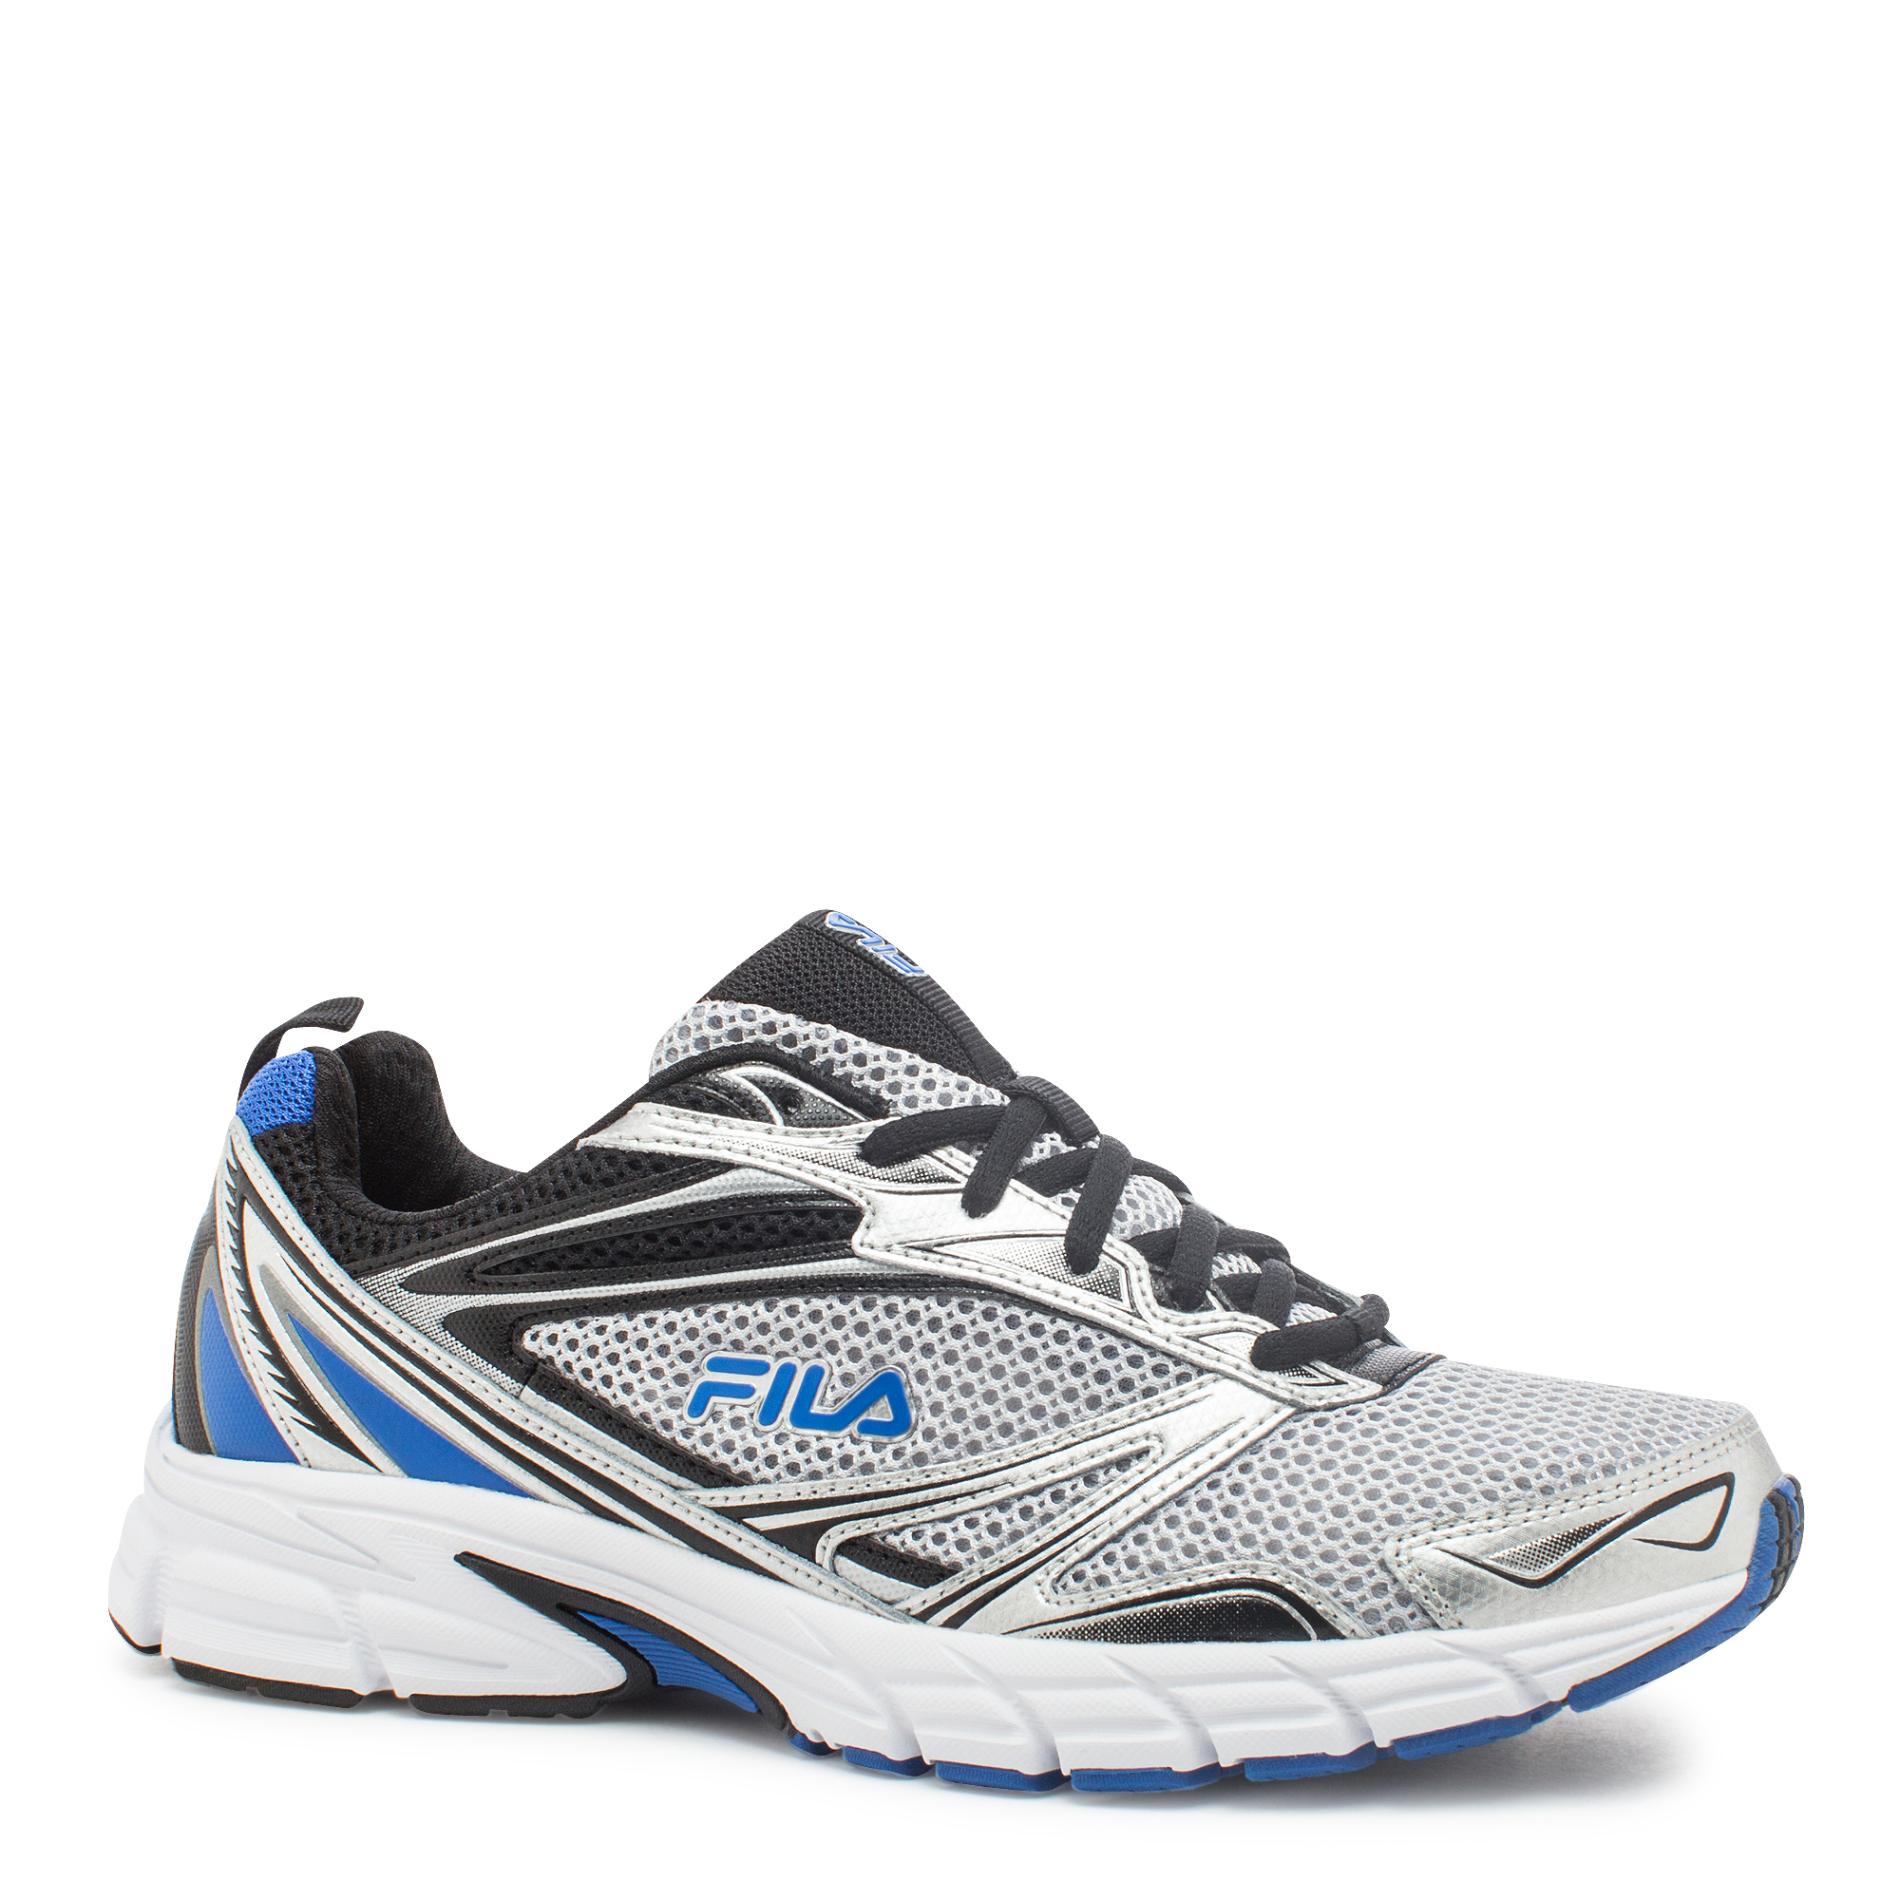 Fila Men's Royalty Silver/Black/Blue Running Shoe